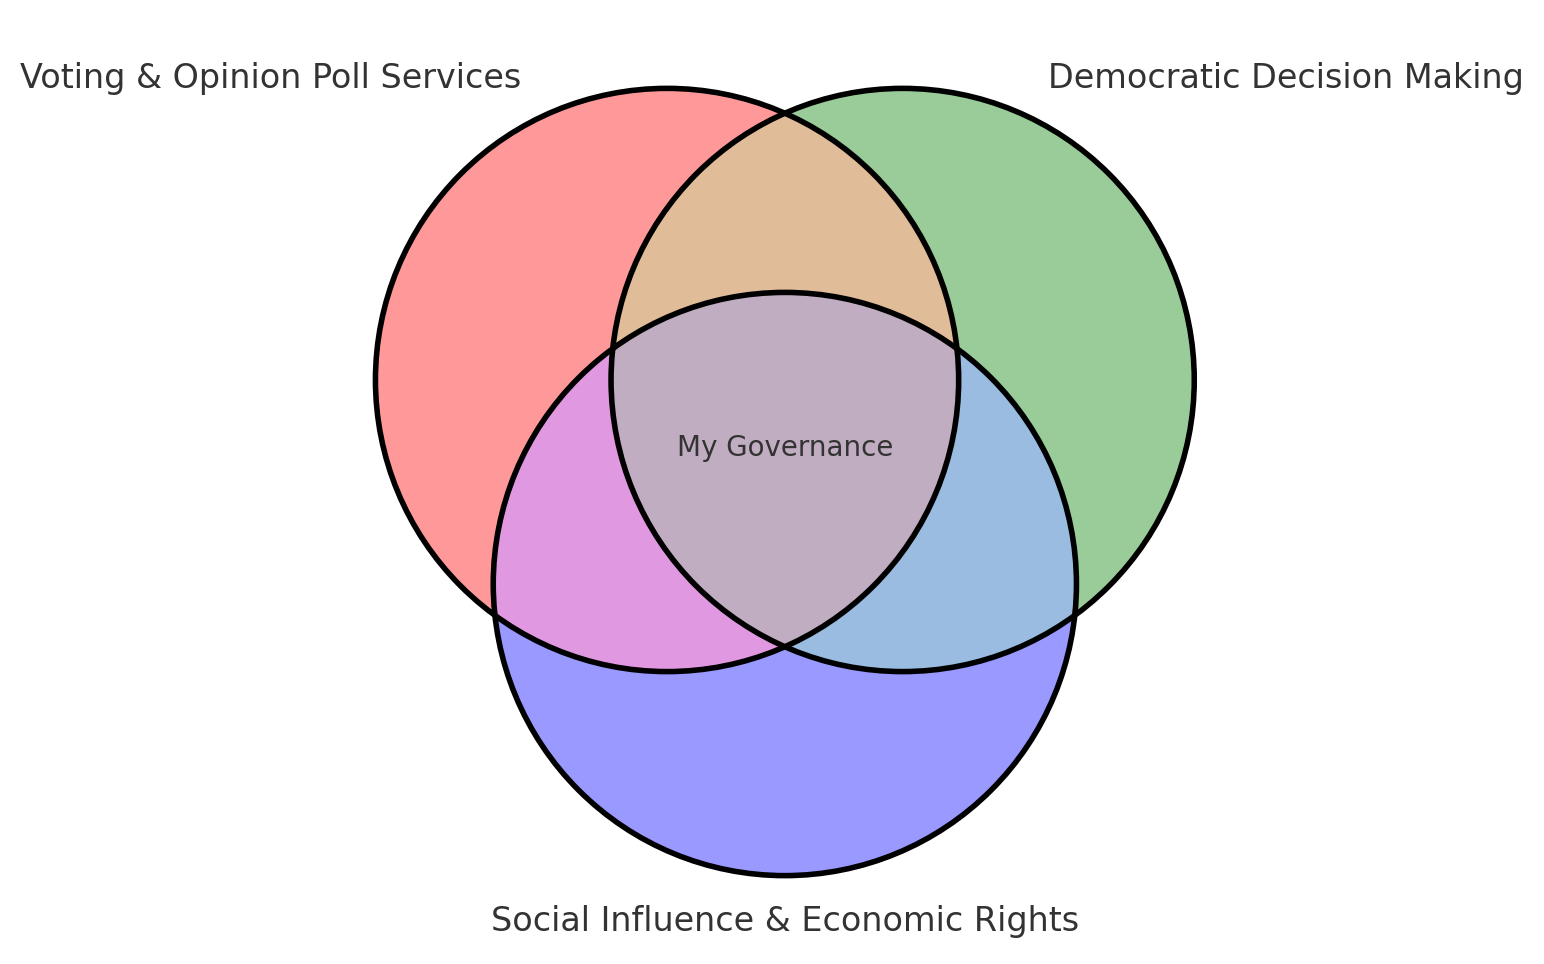 My Governance